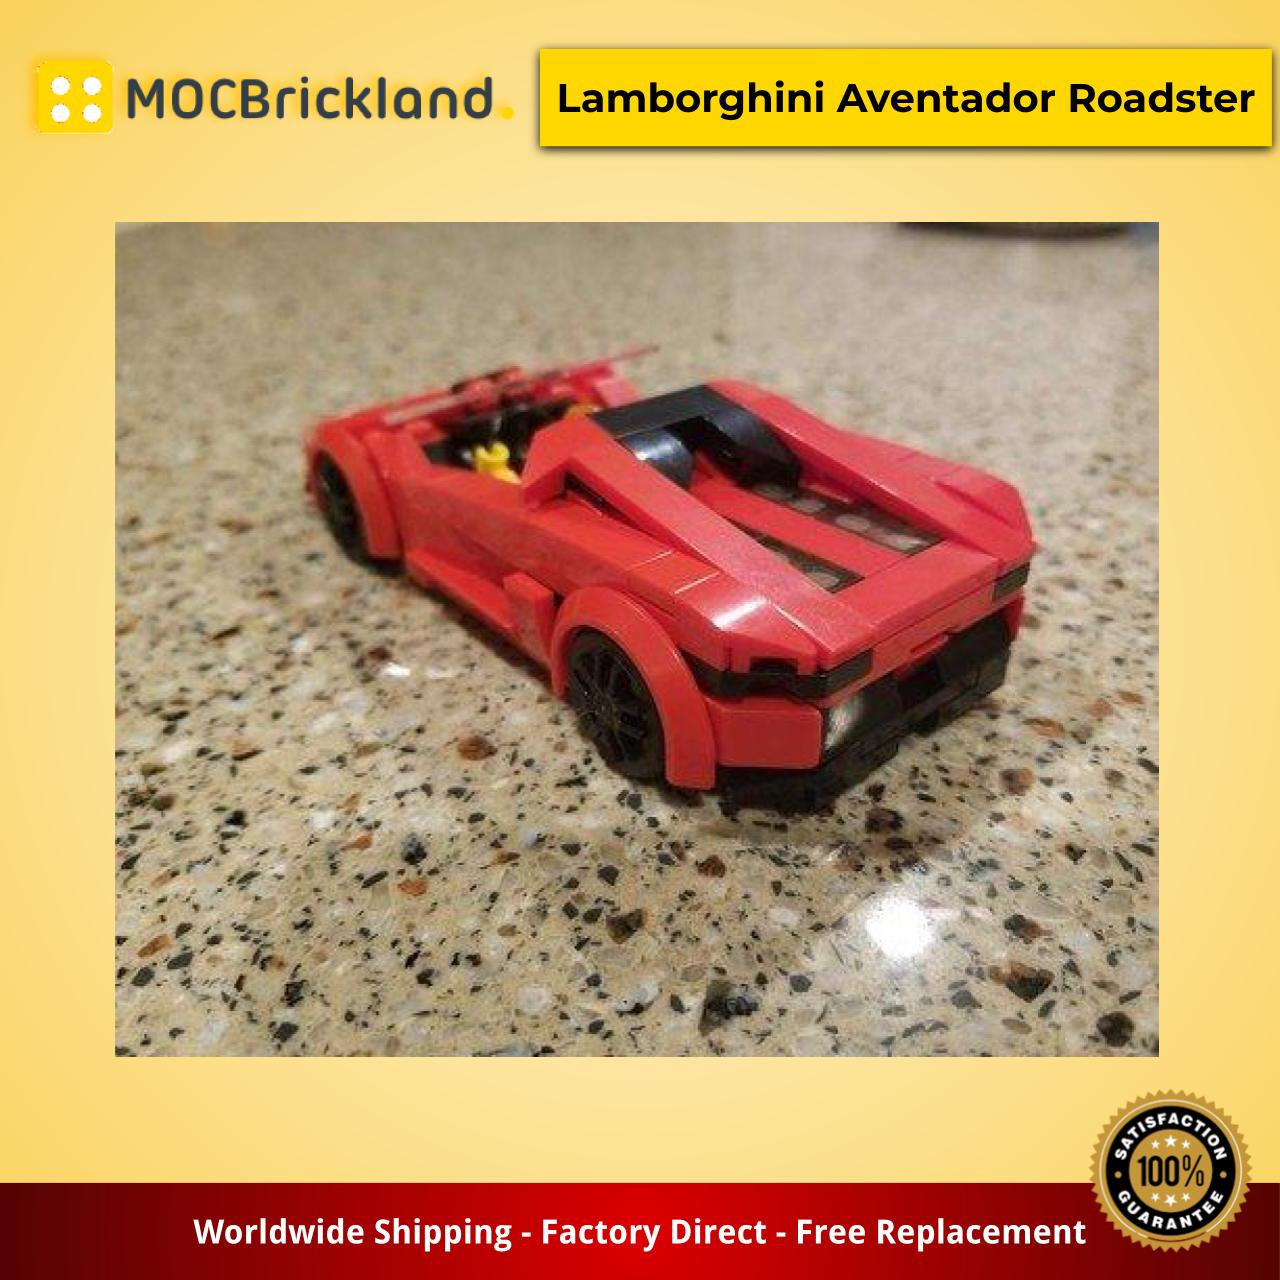 MOCBRICKLAND MOC-16978 Lamborghini Aventador Roadster